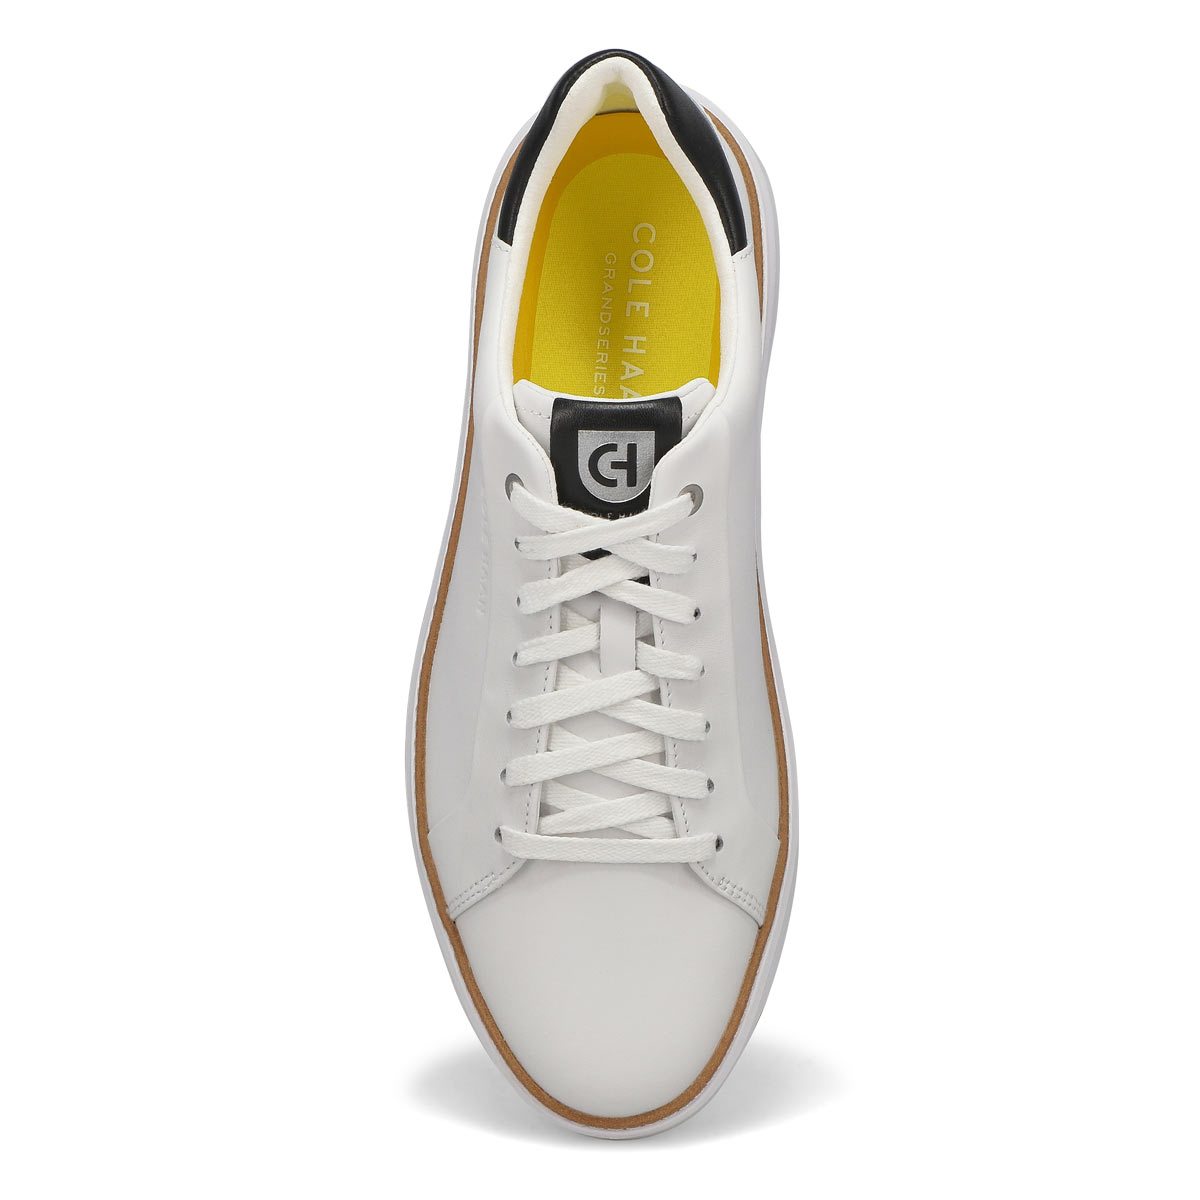 Mens Grandpro Topspin Casual Sneaker - White